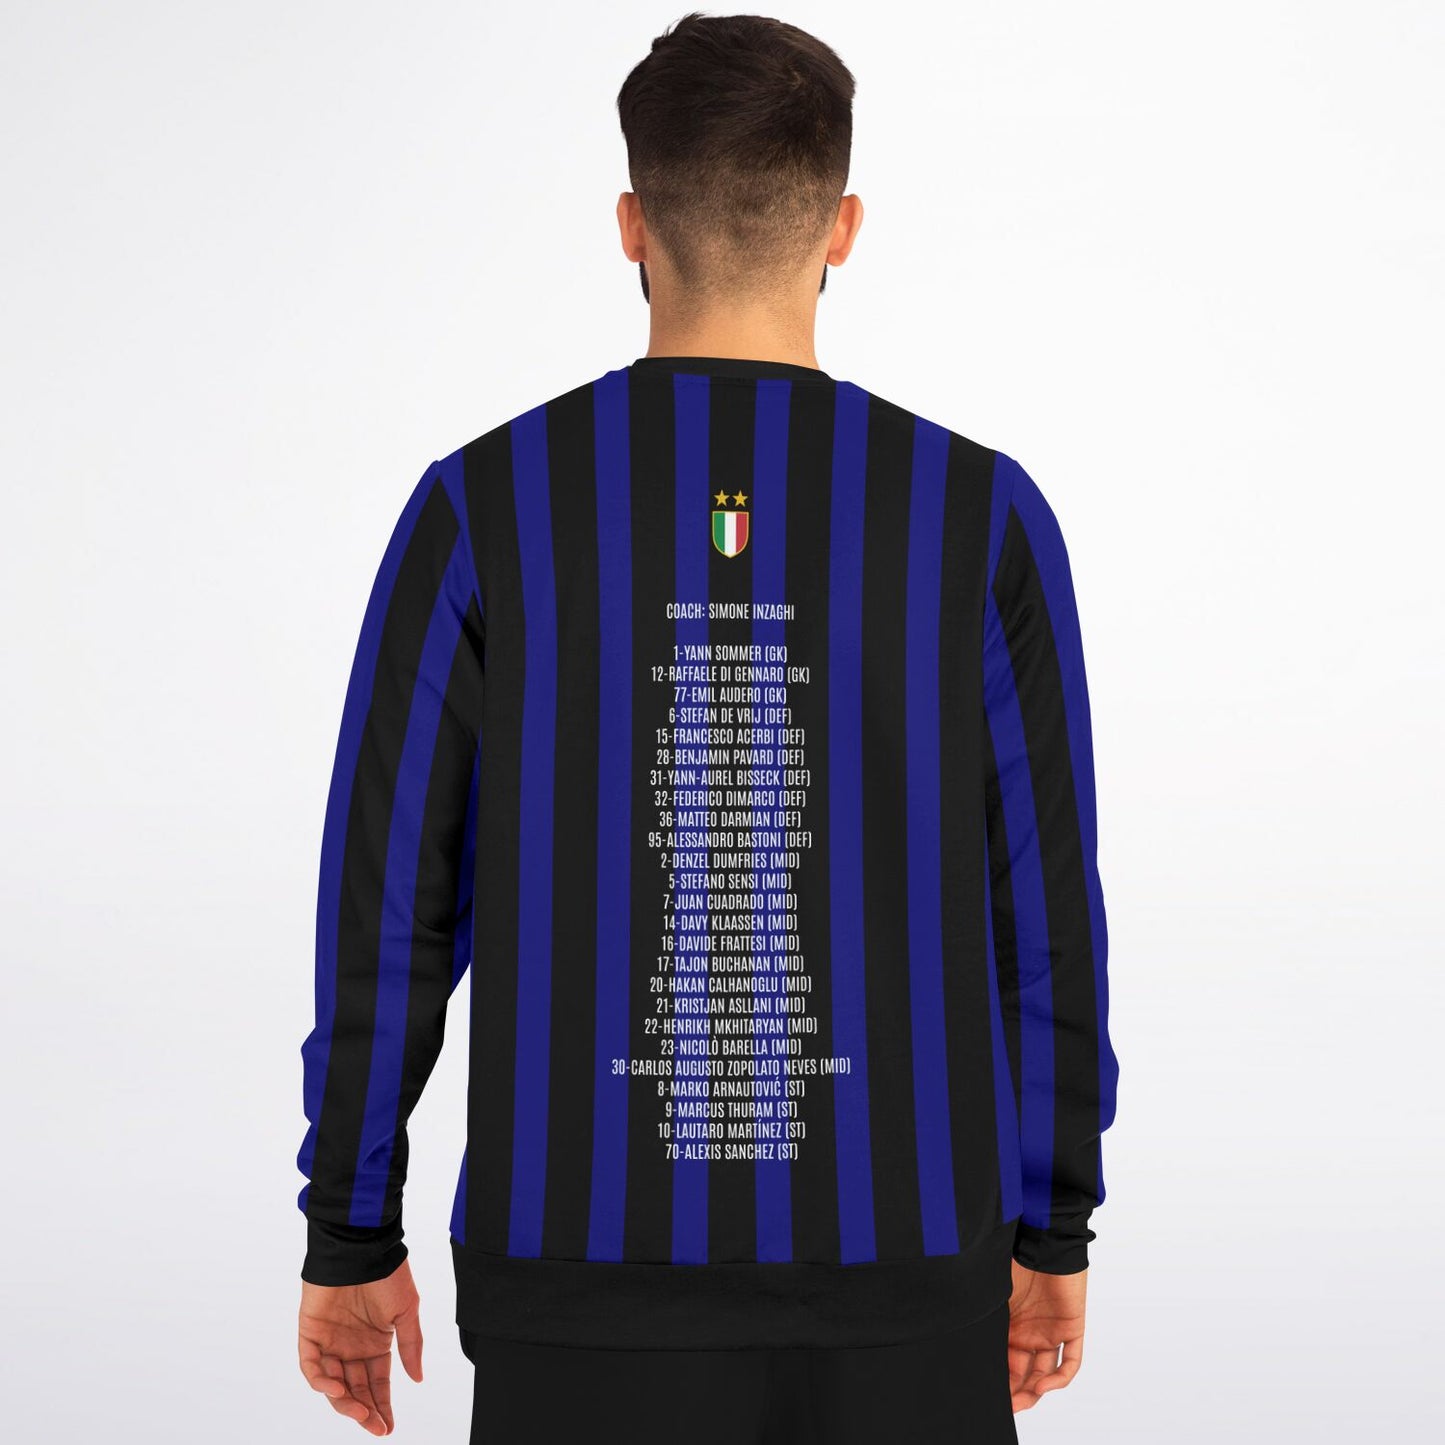 Inter - Campioni d'Italia Sweatshirt Glory Edition